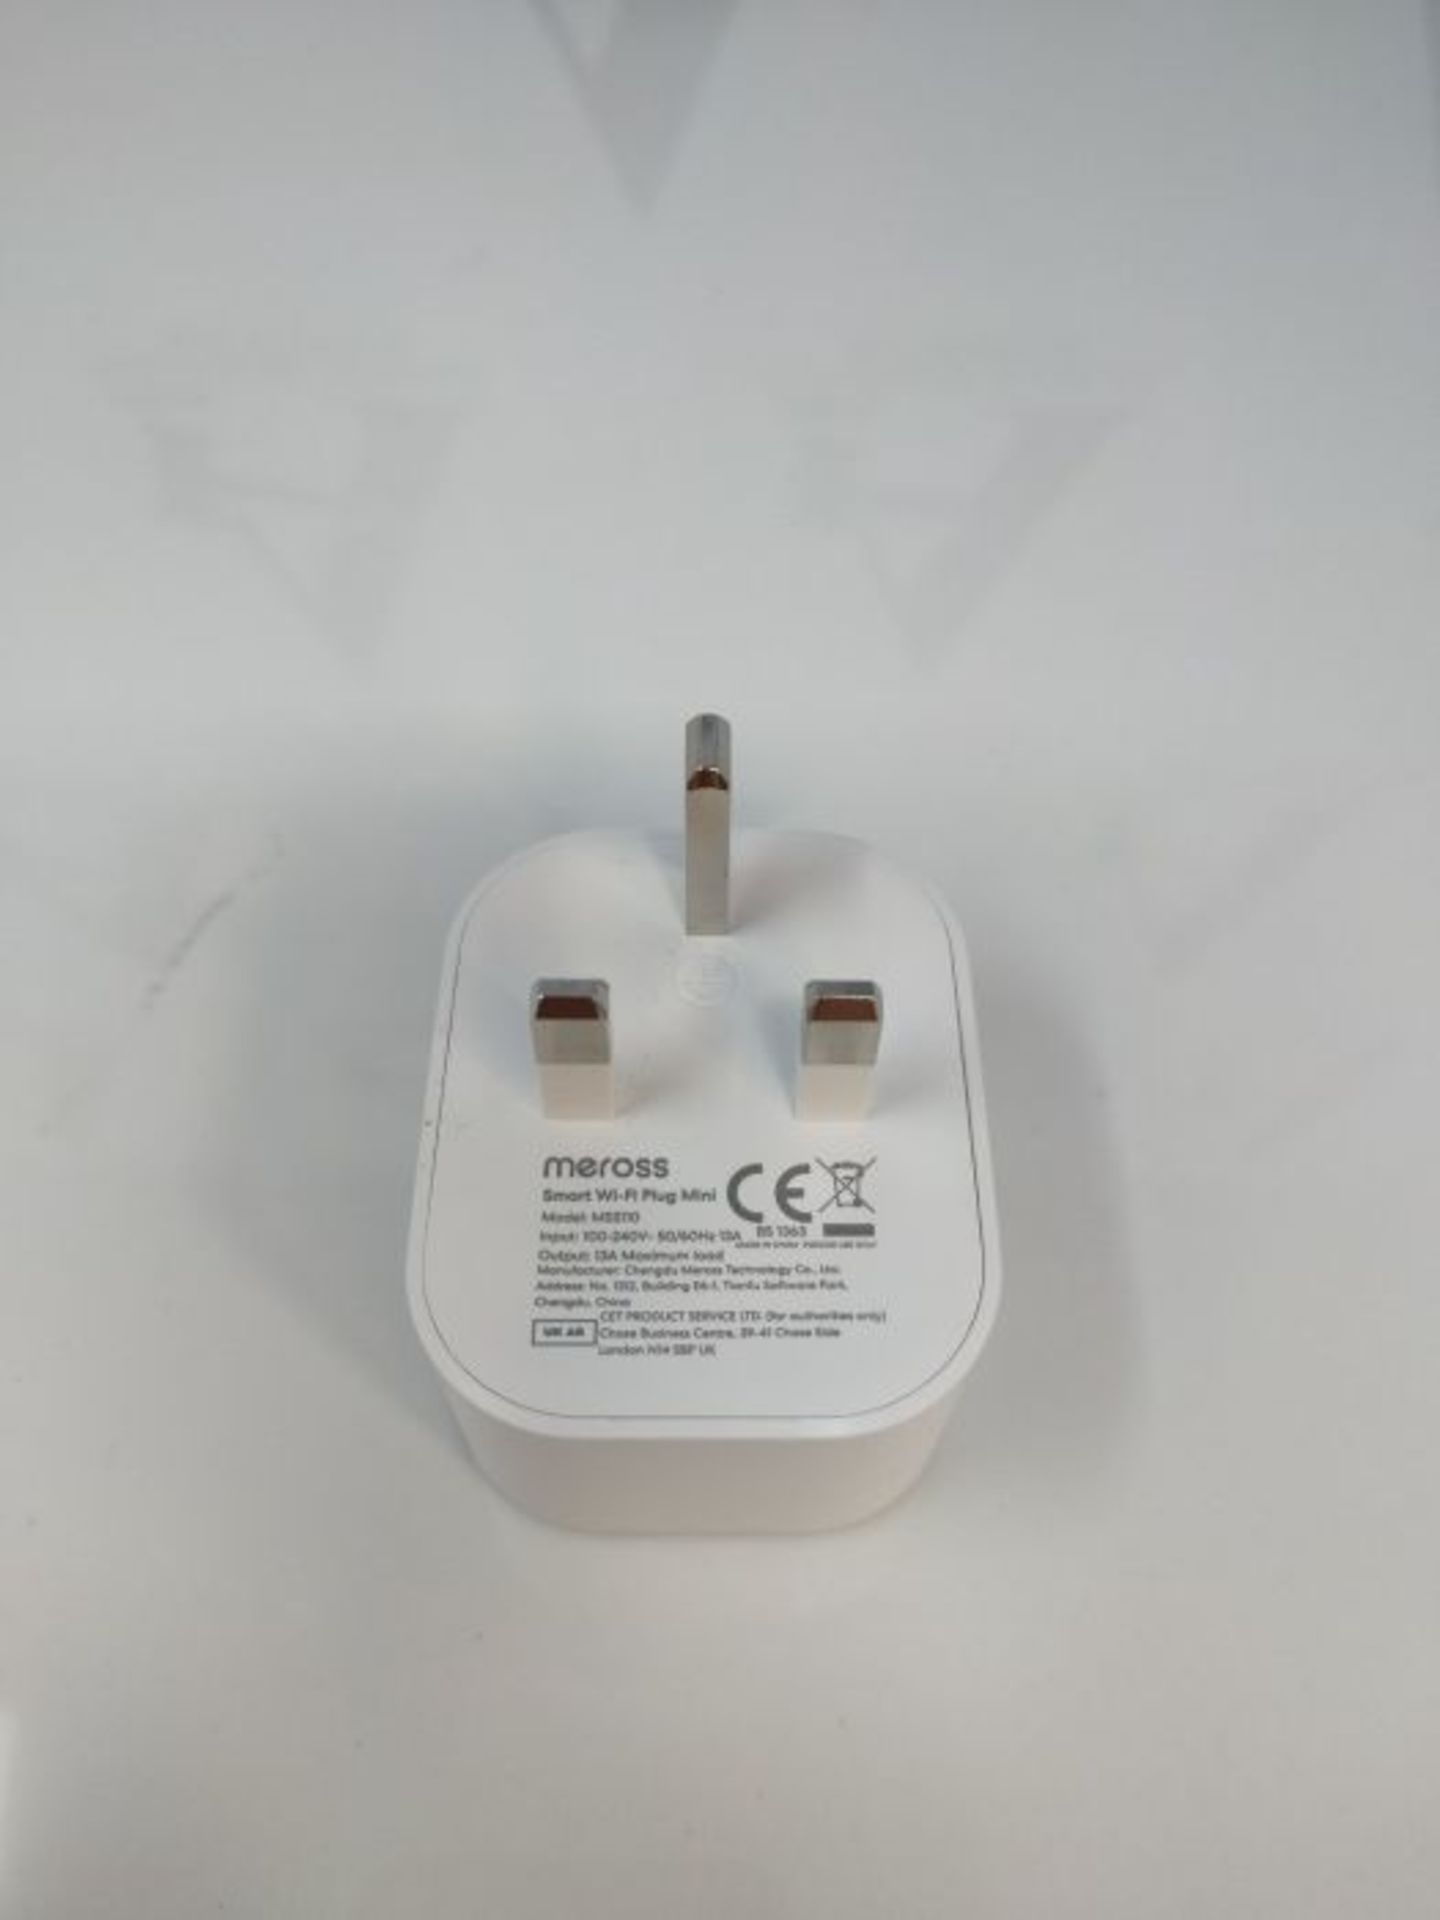 Smart Plug Mini - Meross 13A Wi-Fi Plugs Compatible with HomeKit, Alexa, Google Home, - Image 2 of 2